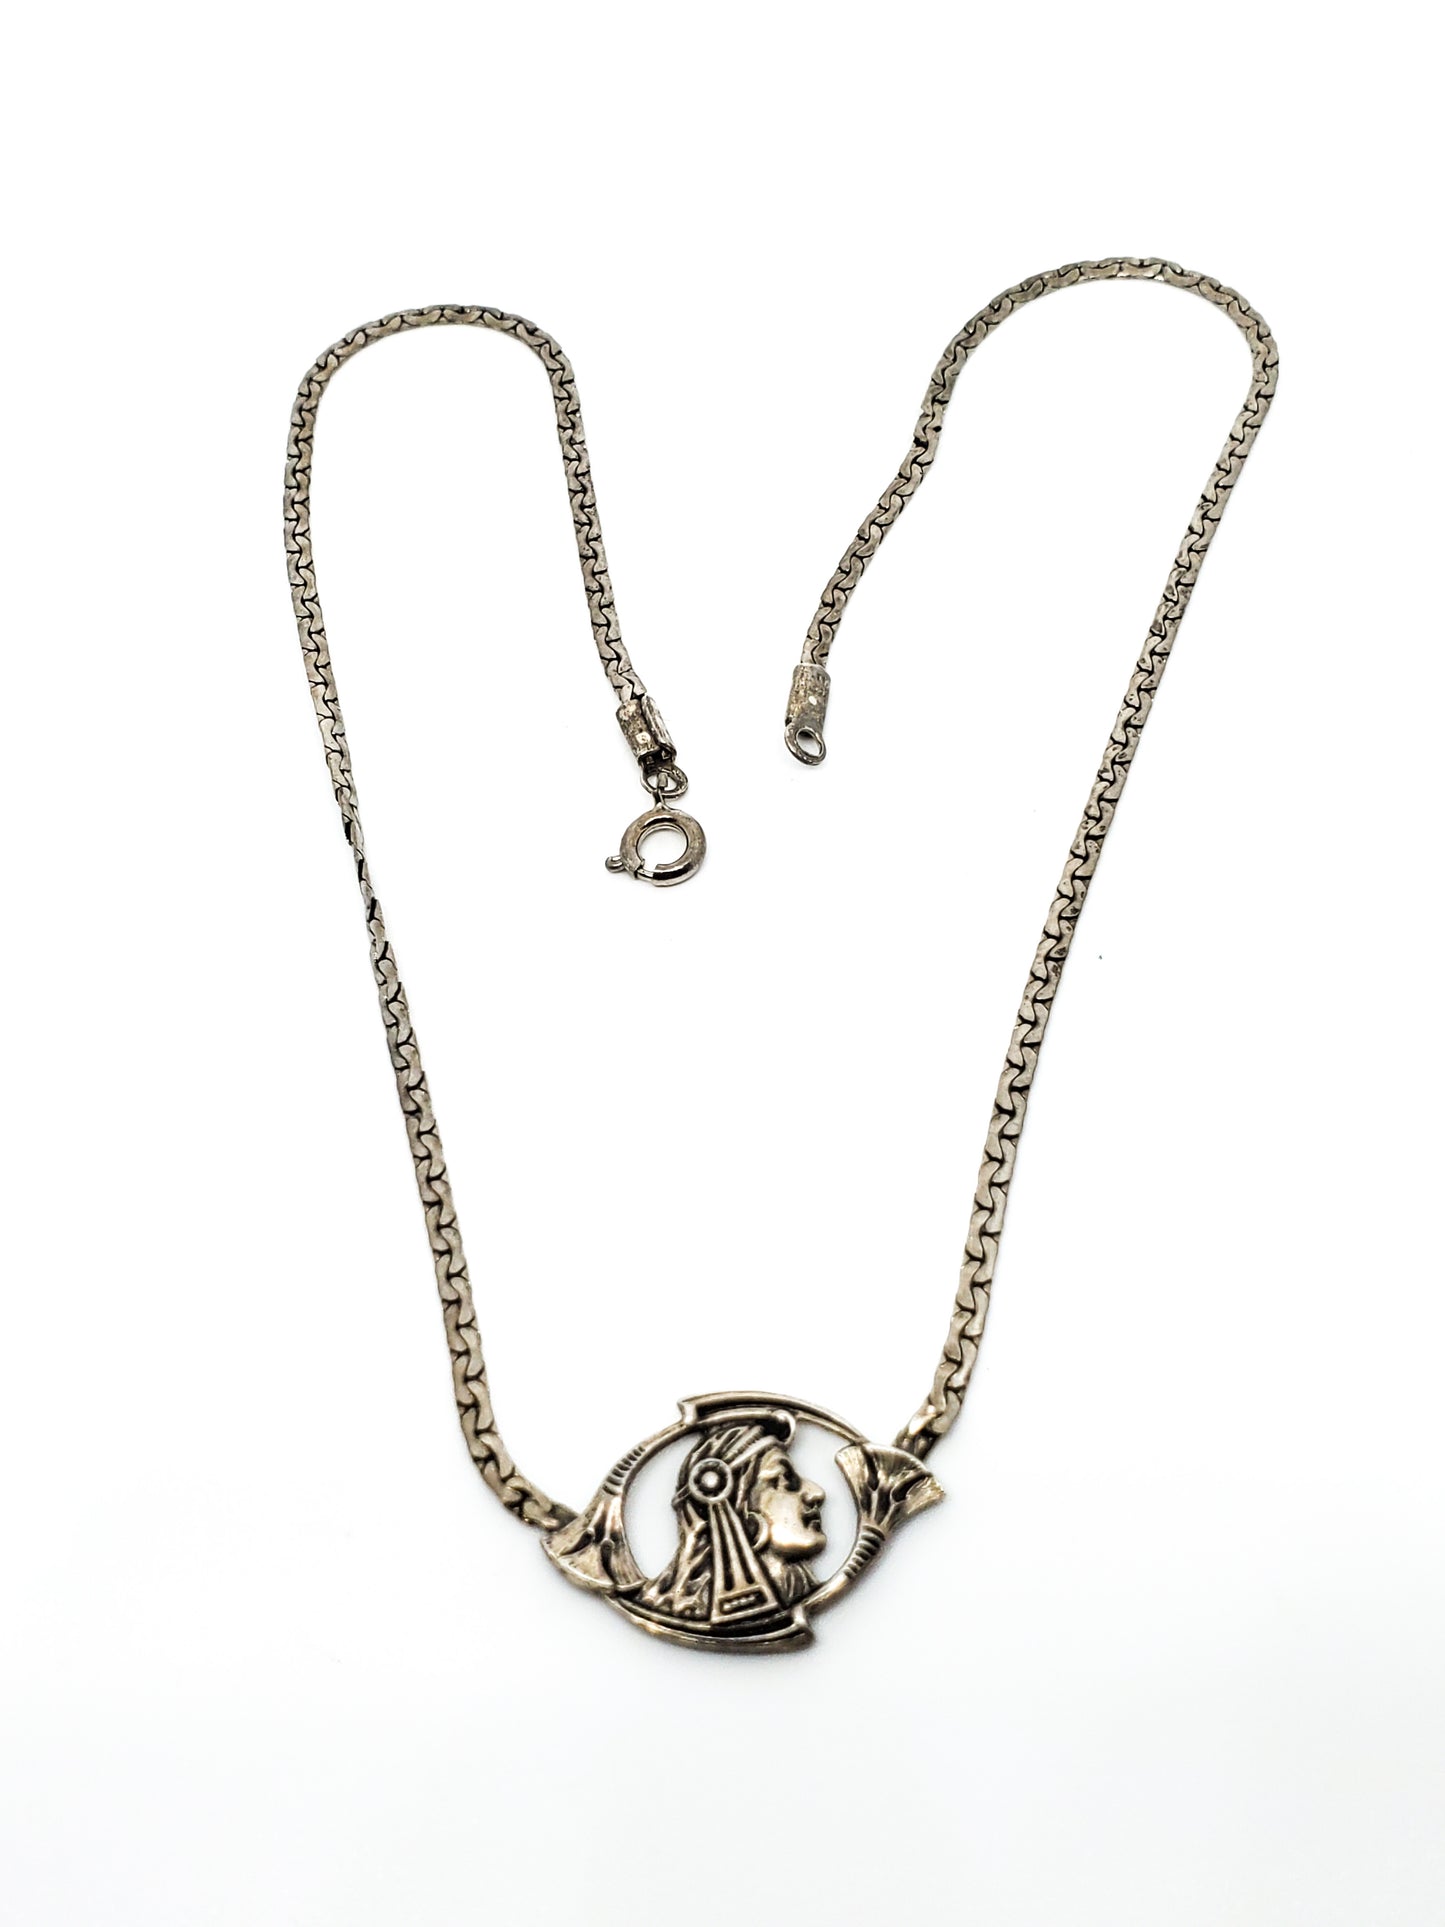 Roman soldier heraldic Artisan handmade sterling silver necklace 925